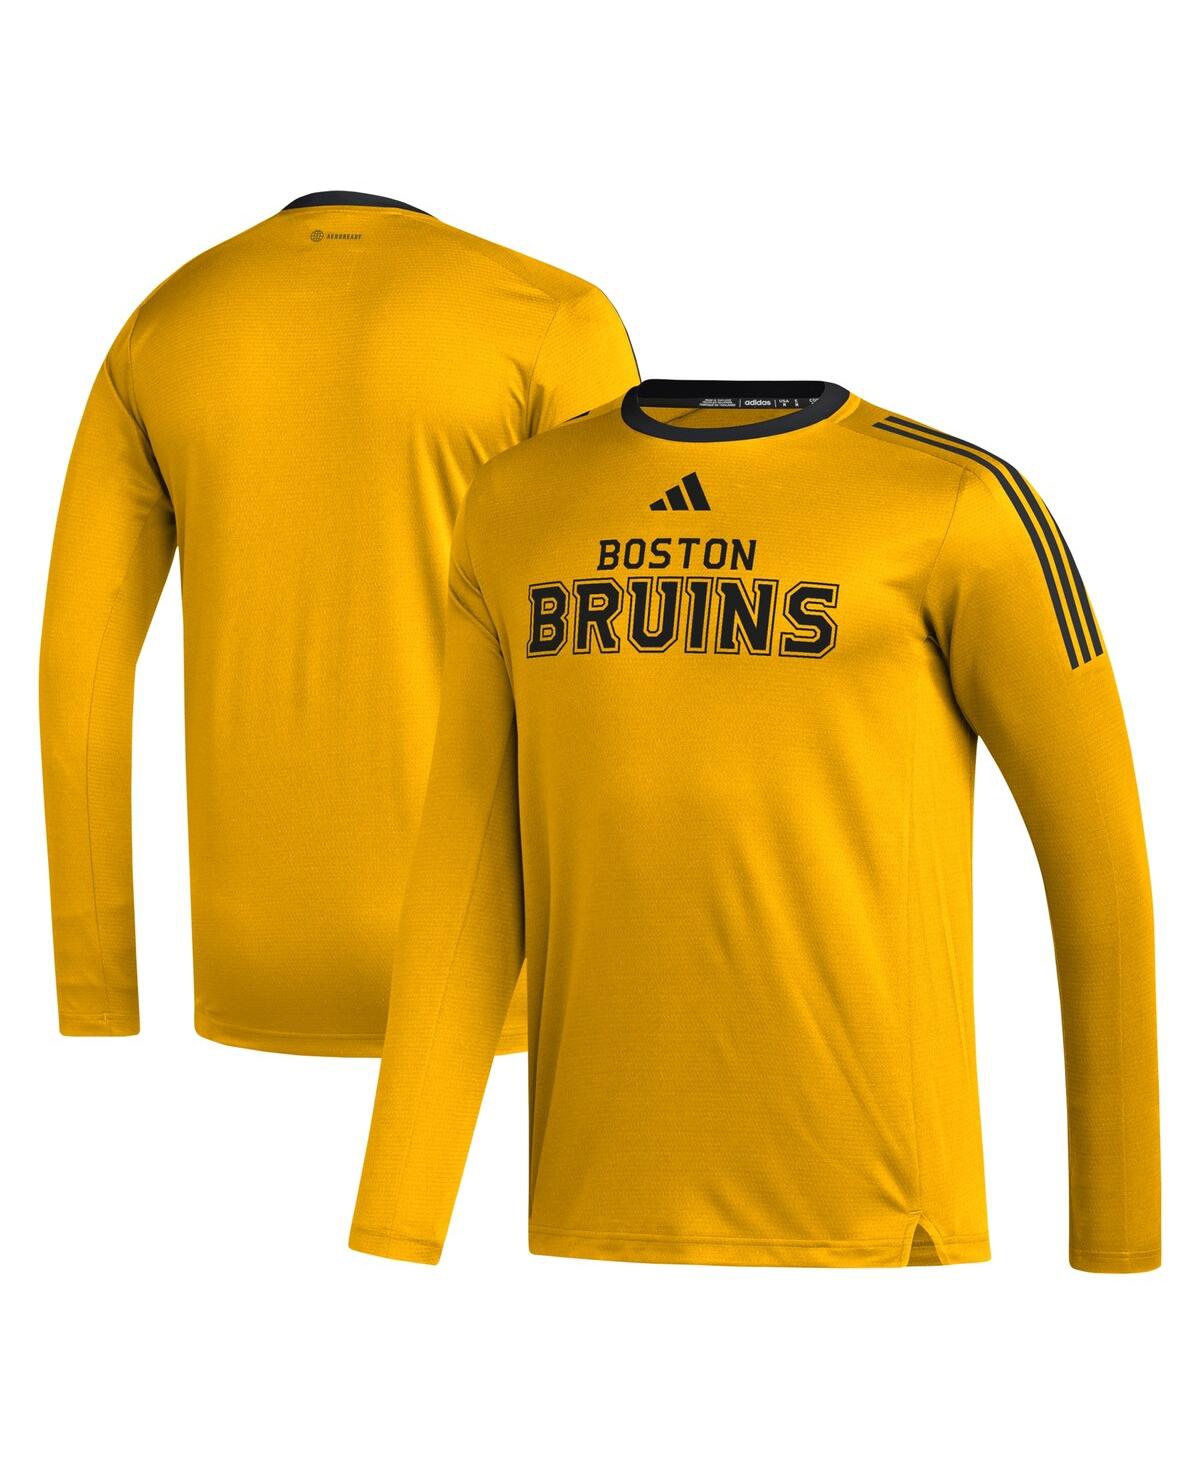 Shop Adidas Originals Men's Adidas Gold Boston Bruins Aeroready Long Sleeve T-shirt